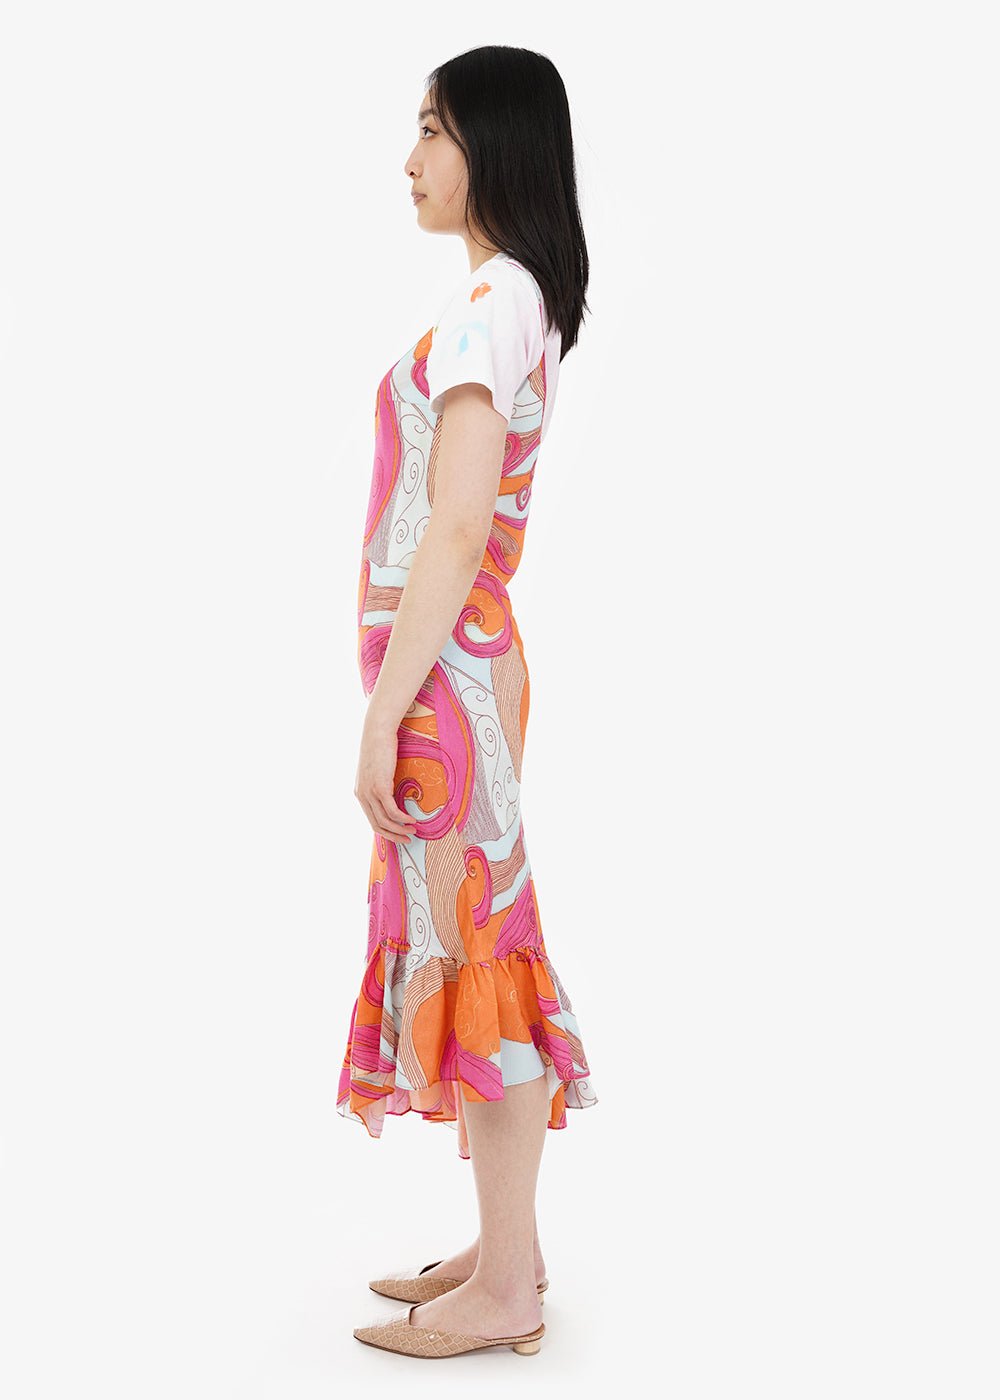 Collina Strada Pink Swirls Michi Dress - New Classics Studios Sustainable Ethical Fashion Canada